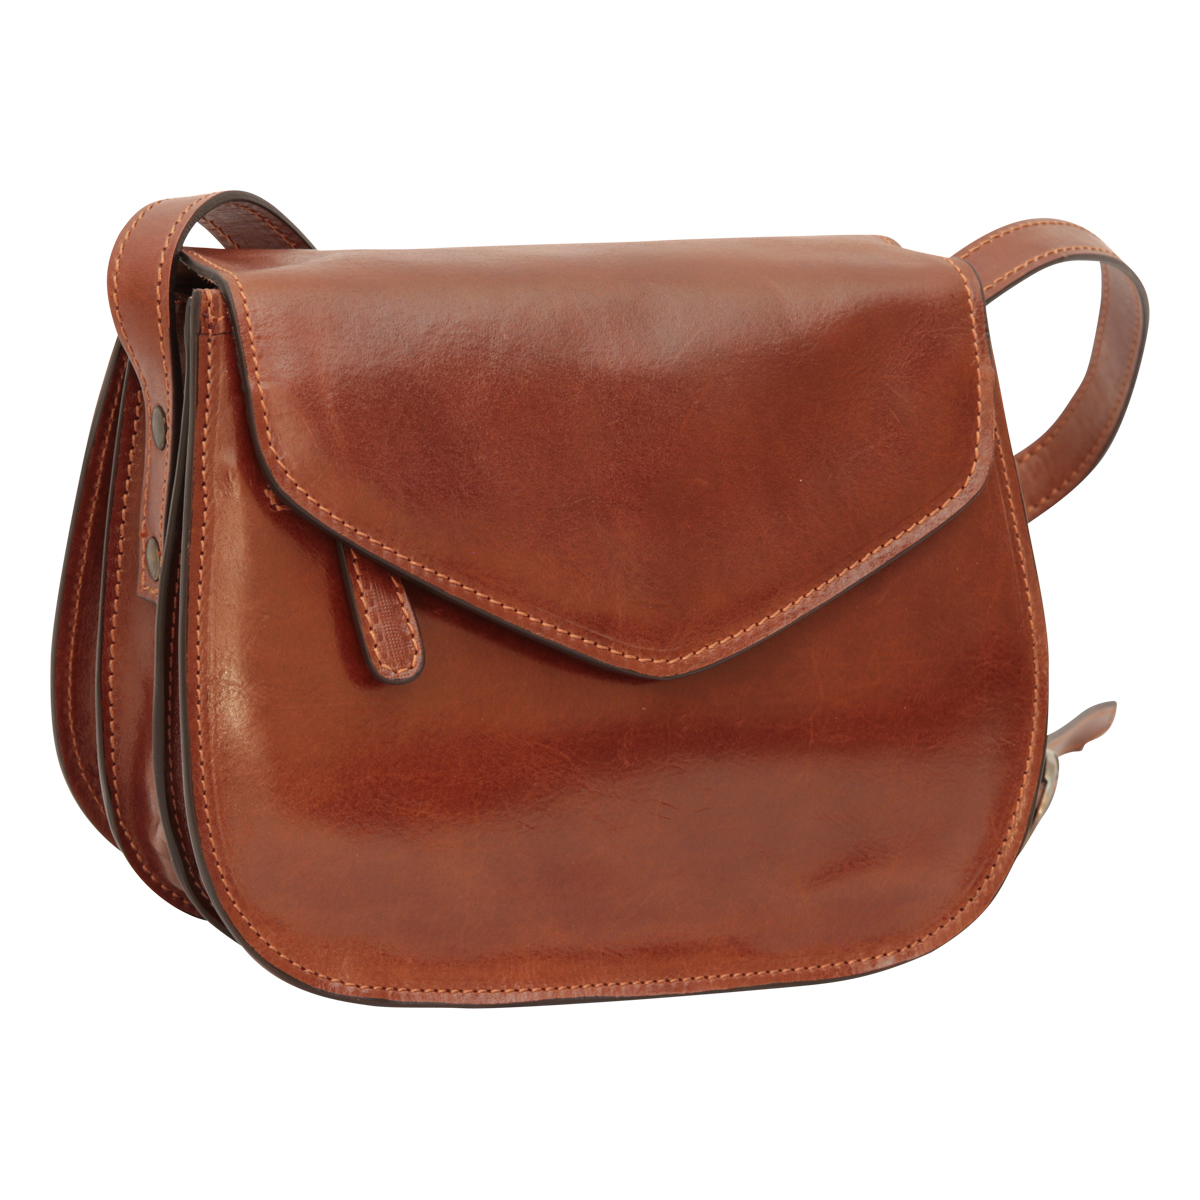 Full grain calfskin shoulder bag - brown | 209605MA | EURO | Old Angler Firenze